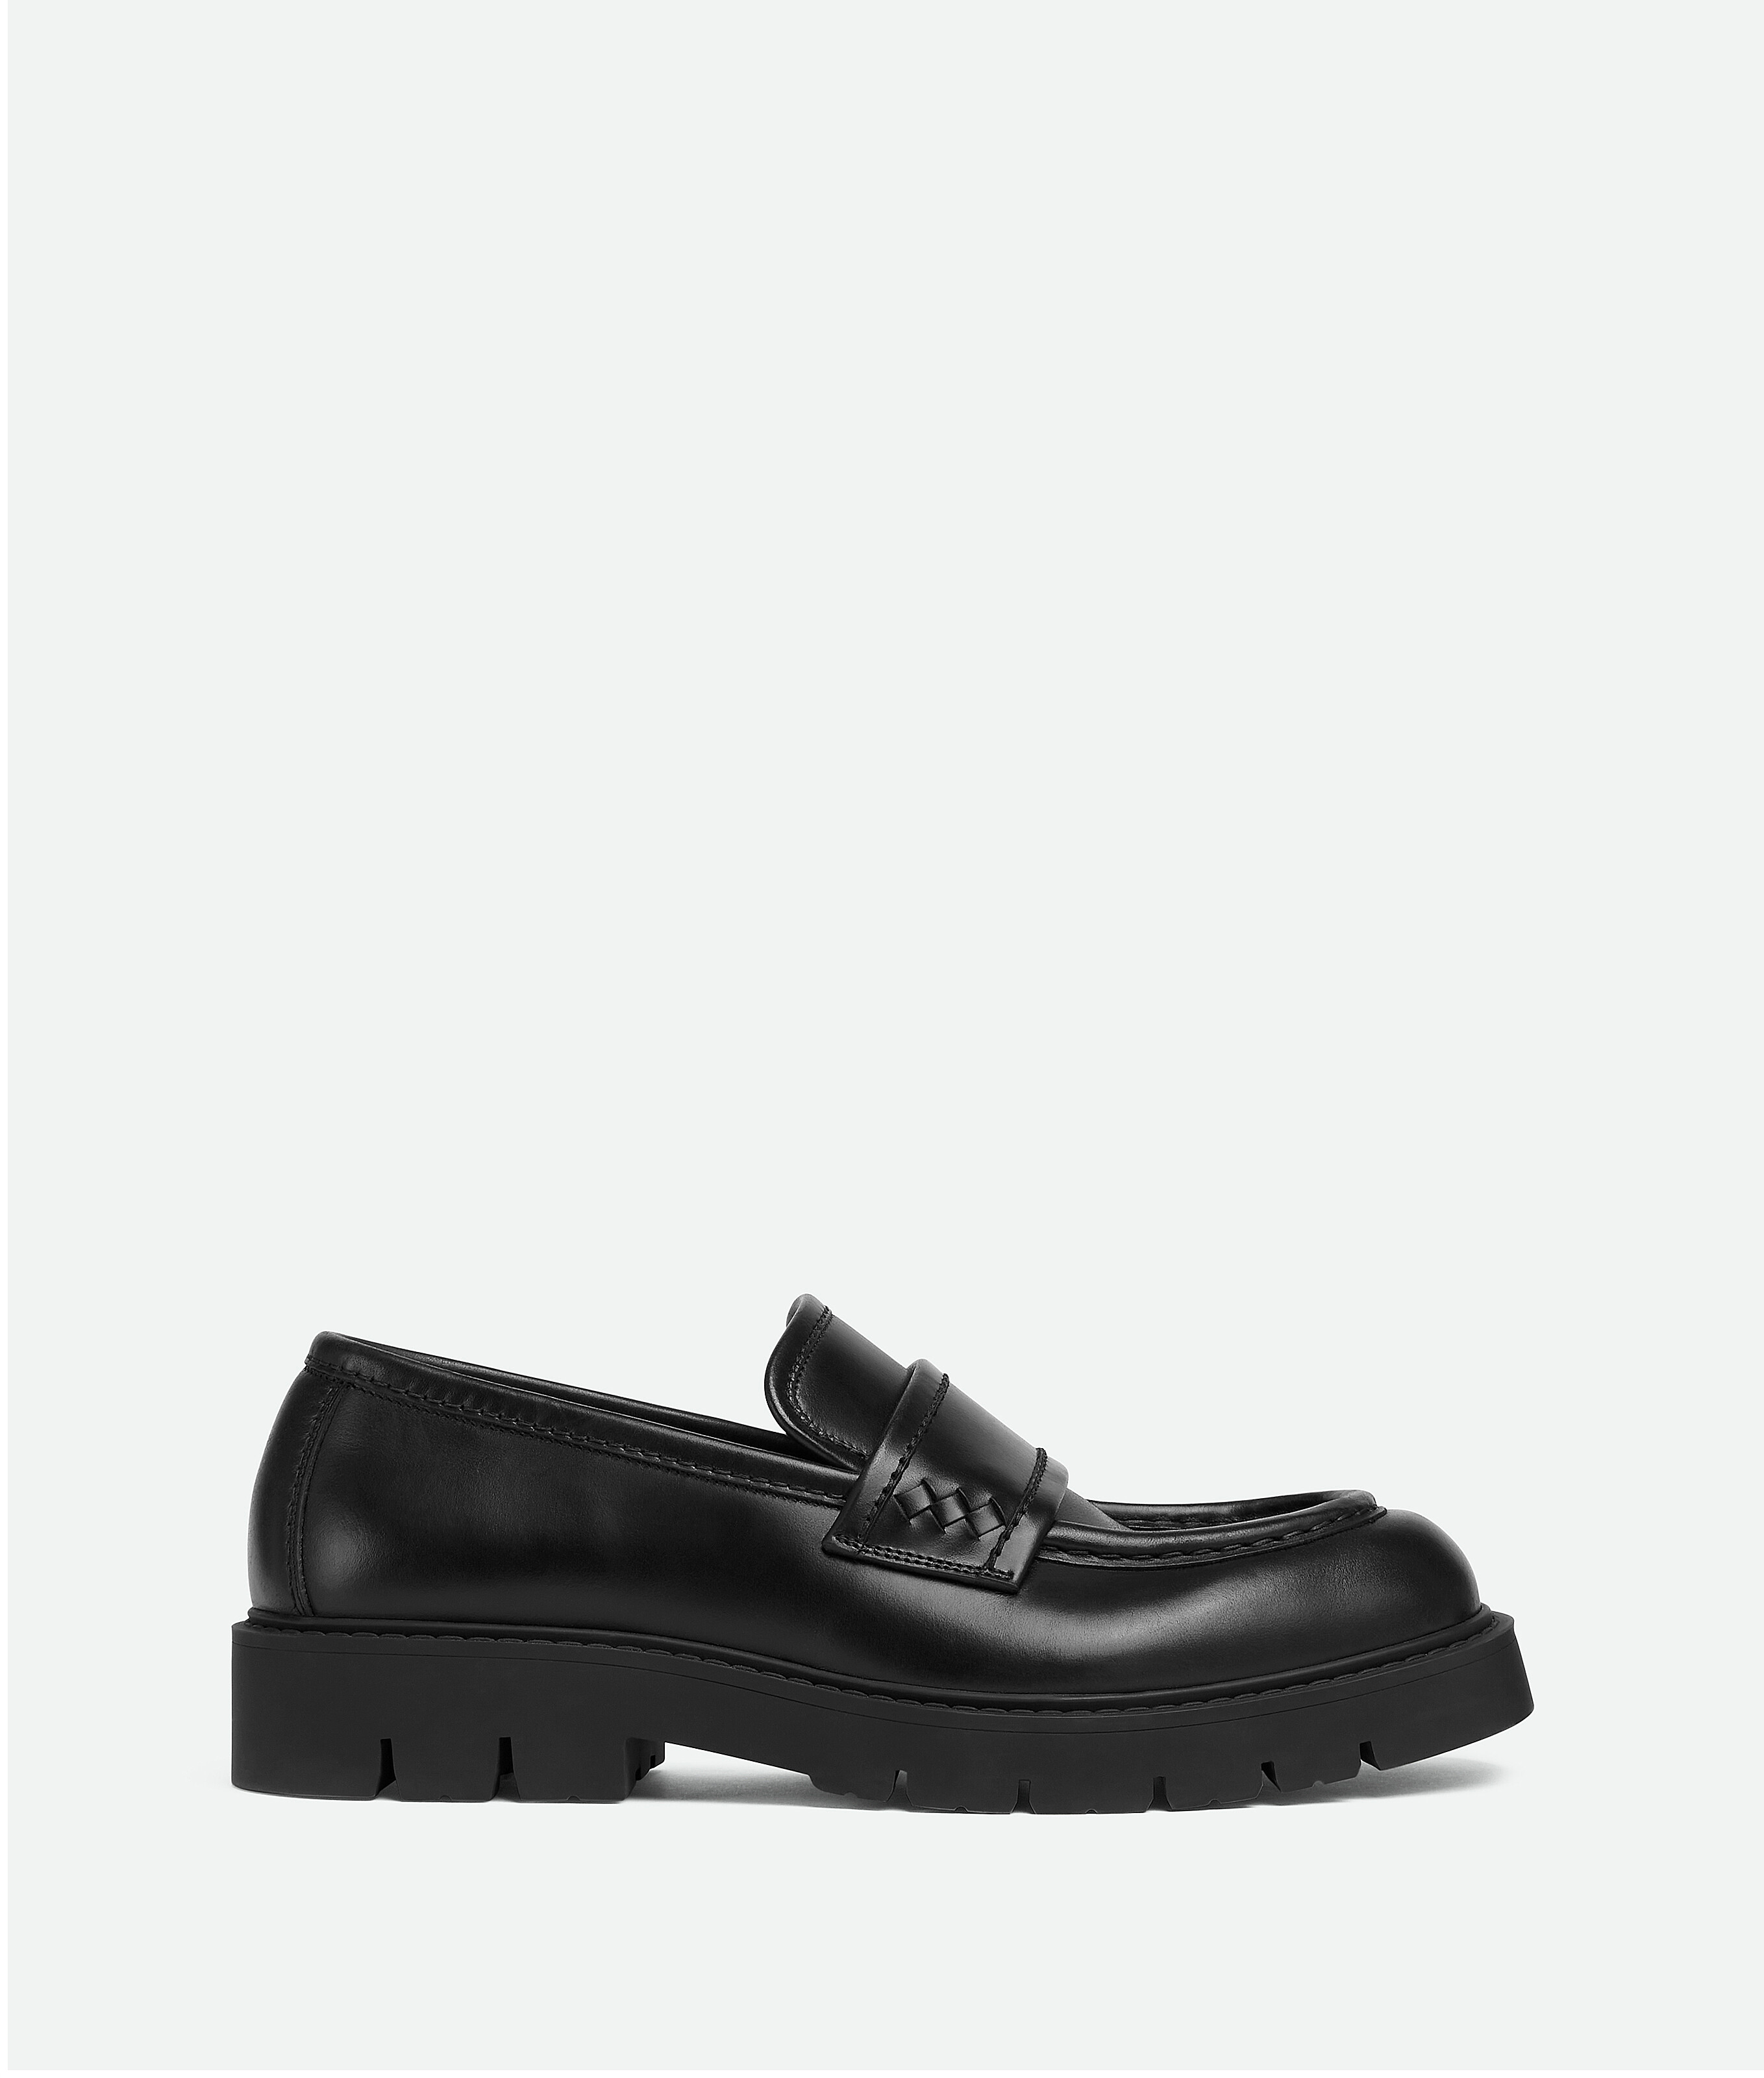 filosofi at se animation Bottega Veneta® Men's Haddock Loafer in Black. Shop online now.